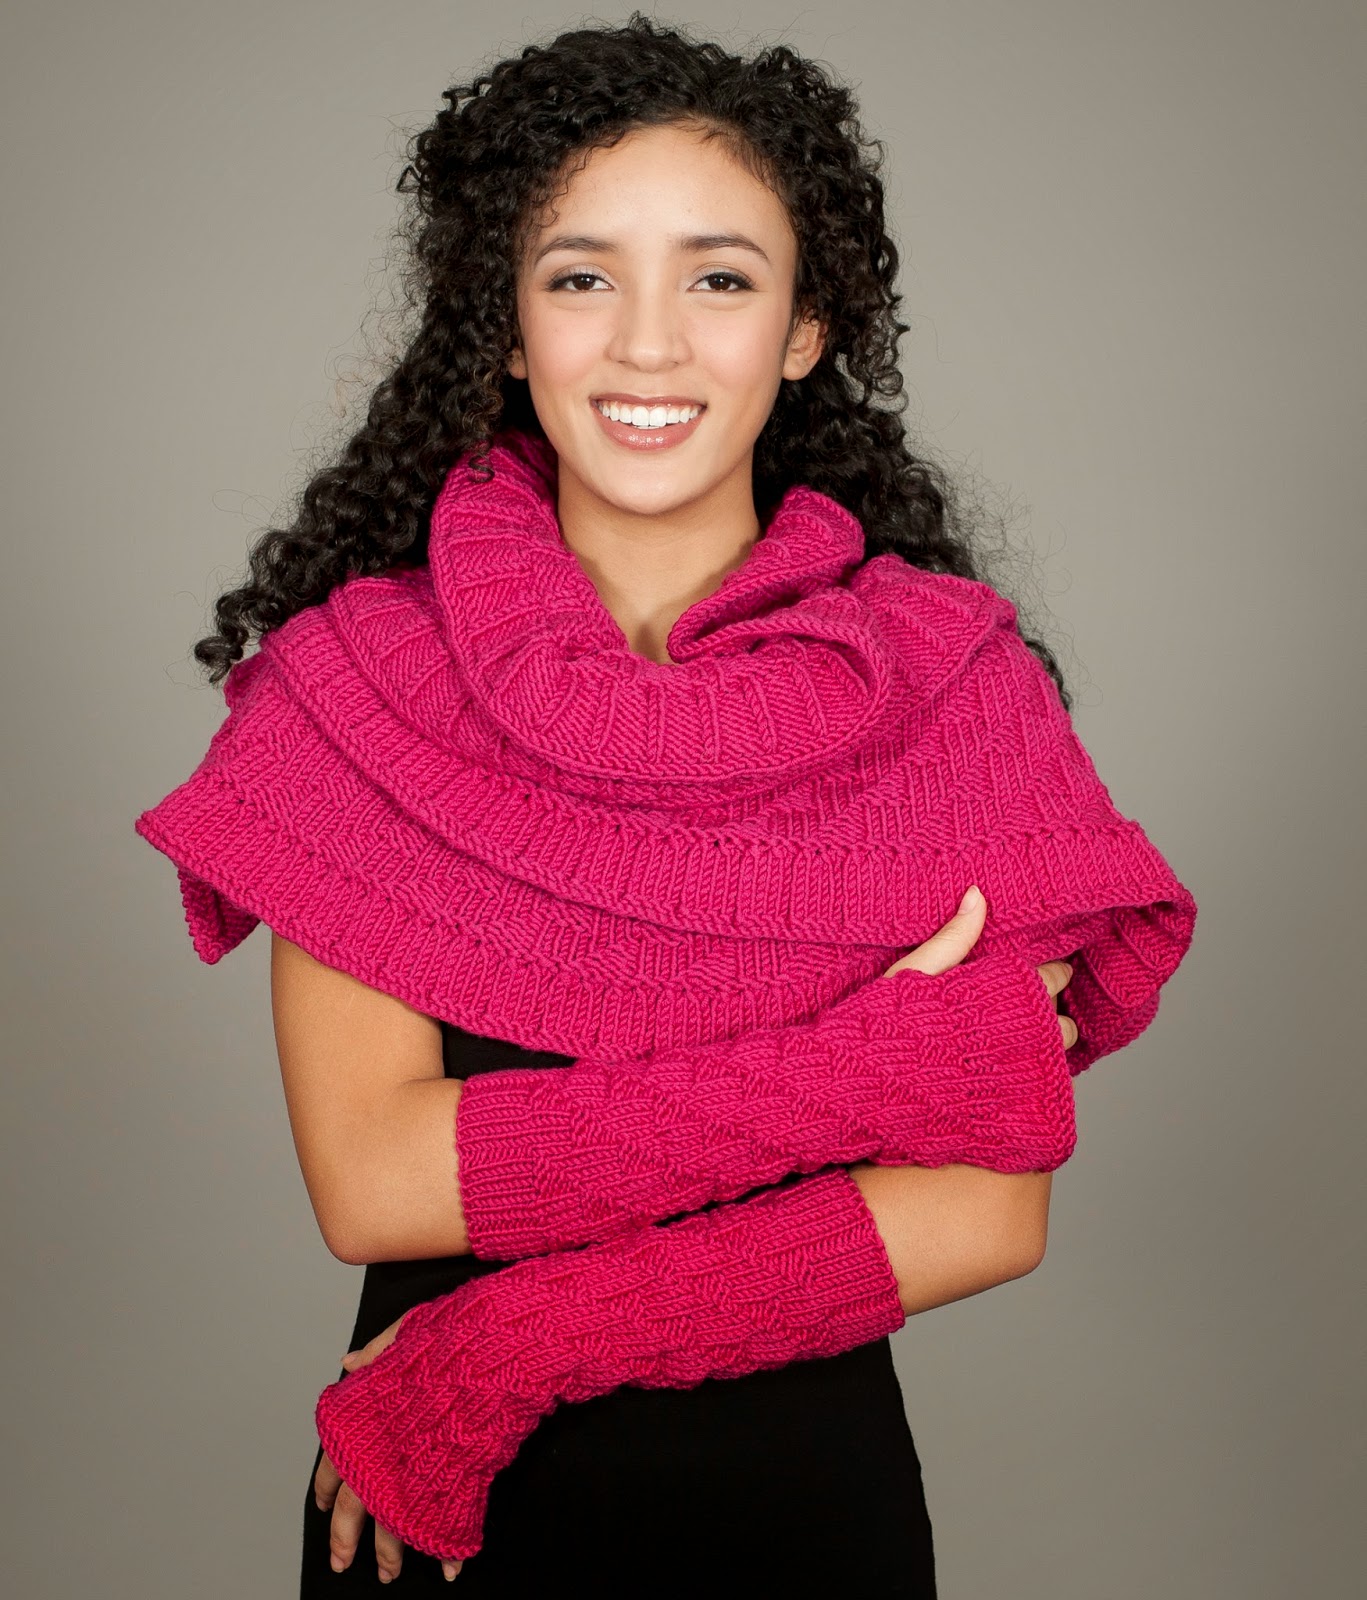 Luxury Knit Fashion by Elena Rosenberg, Made in New York